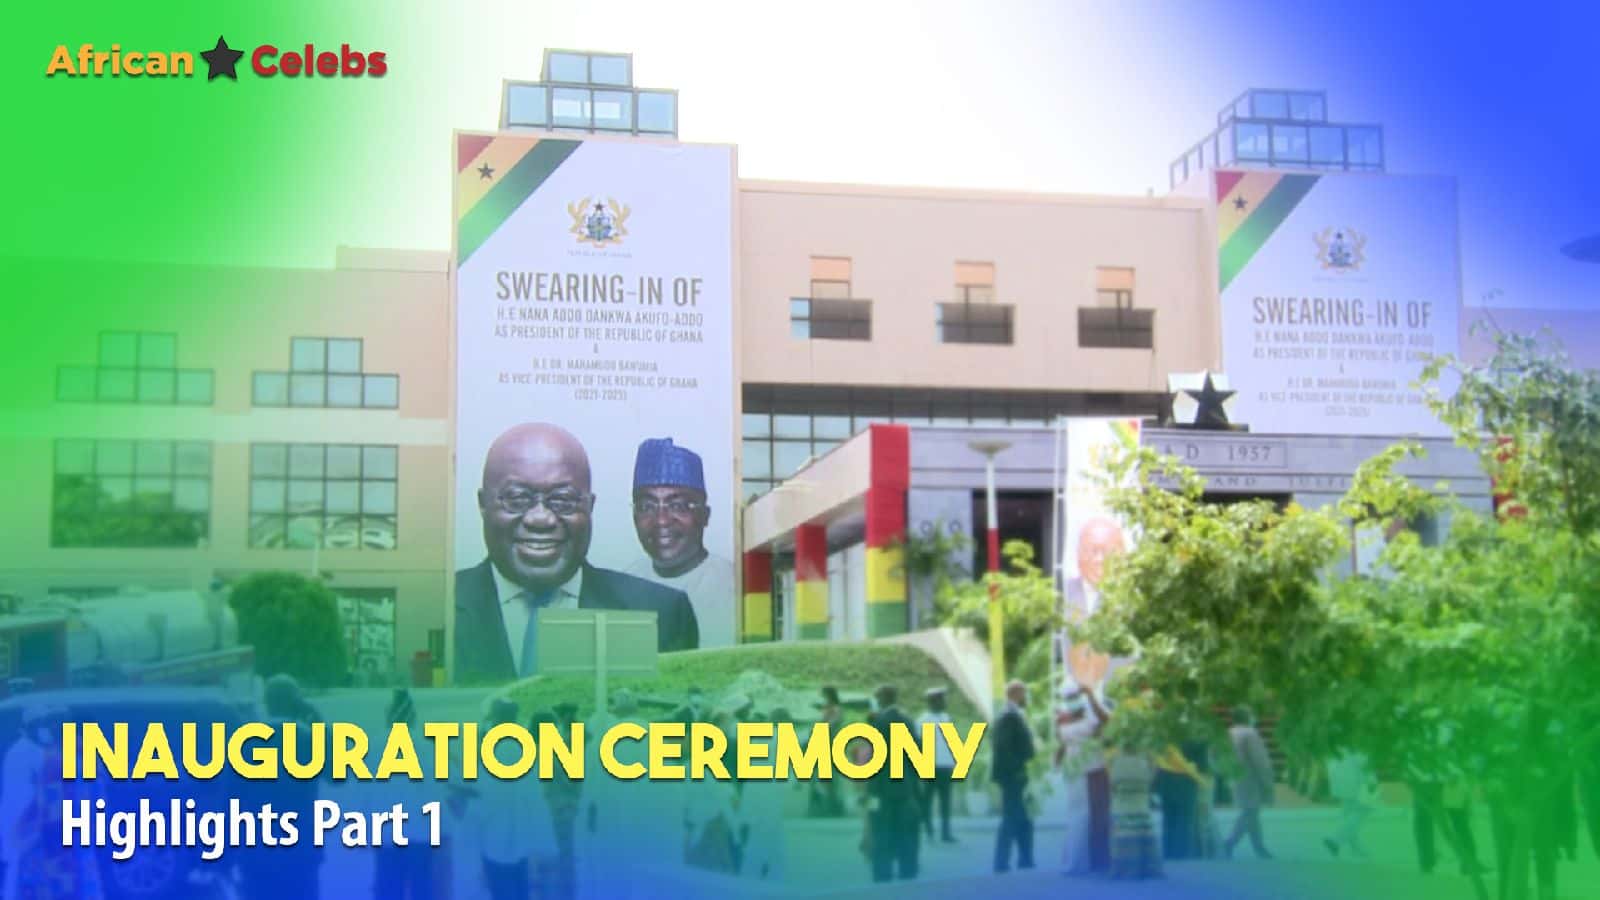 H.E Nana Akufo-Addo Inauguration Ceremony Highlights